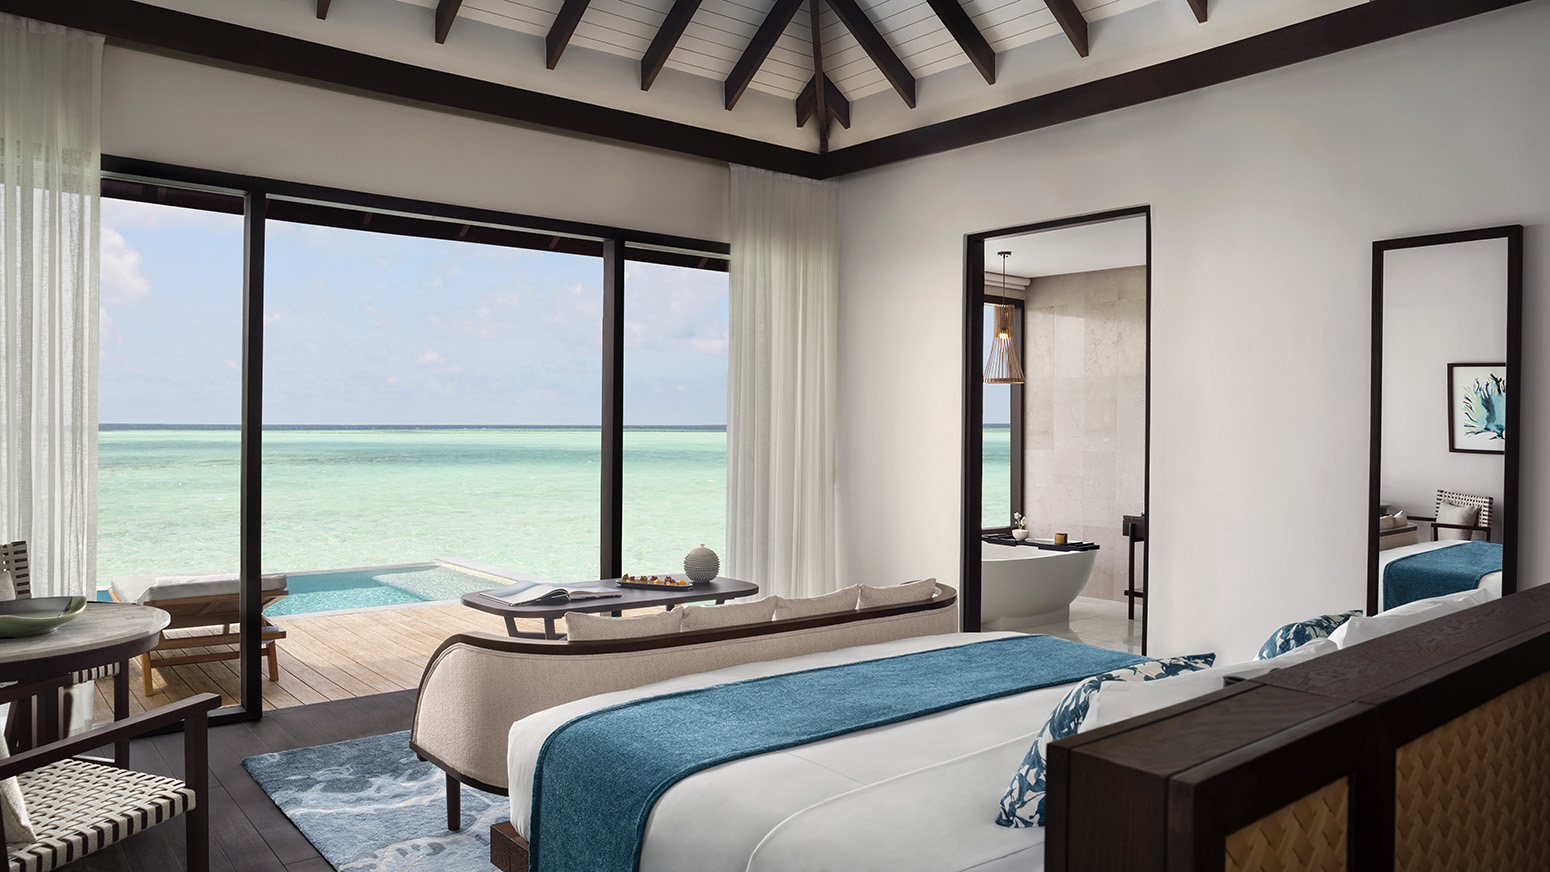 Anantara Veli Maldives Resort Accommodation Over Water Pool Villa Bedroom